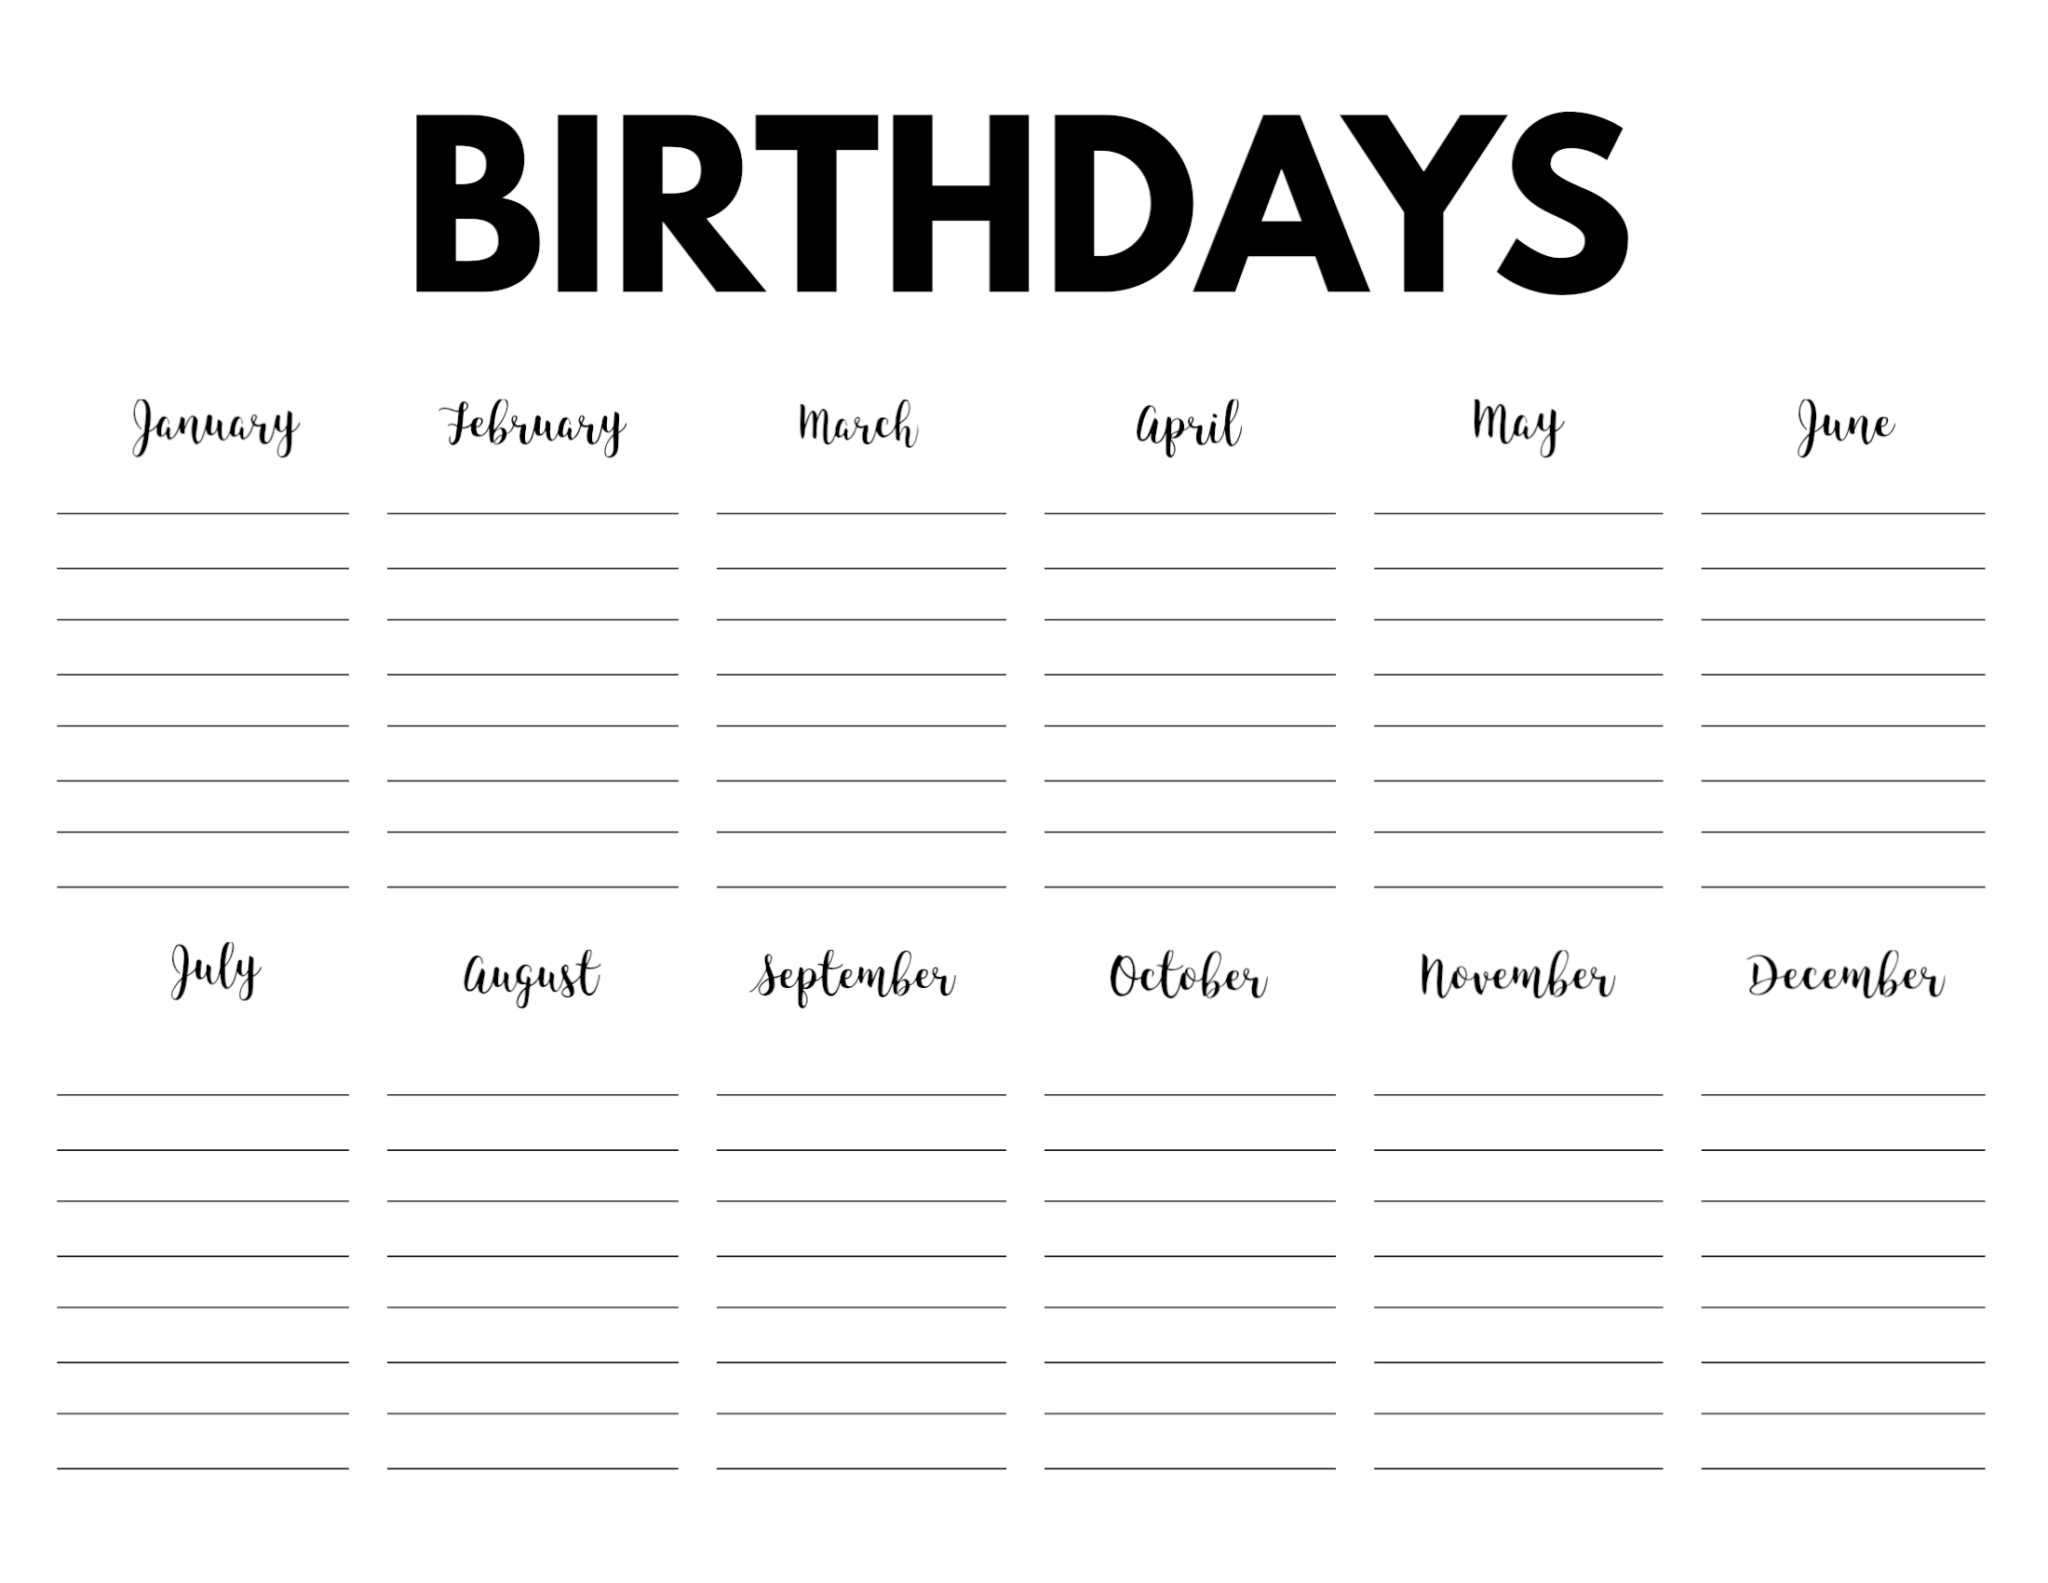 12 month birthday calendar free printable 63